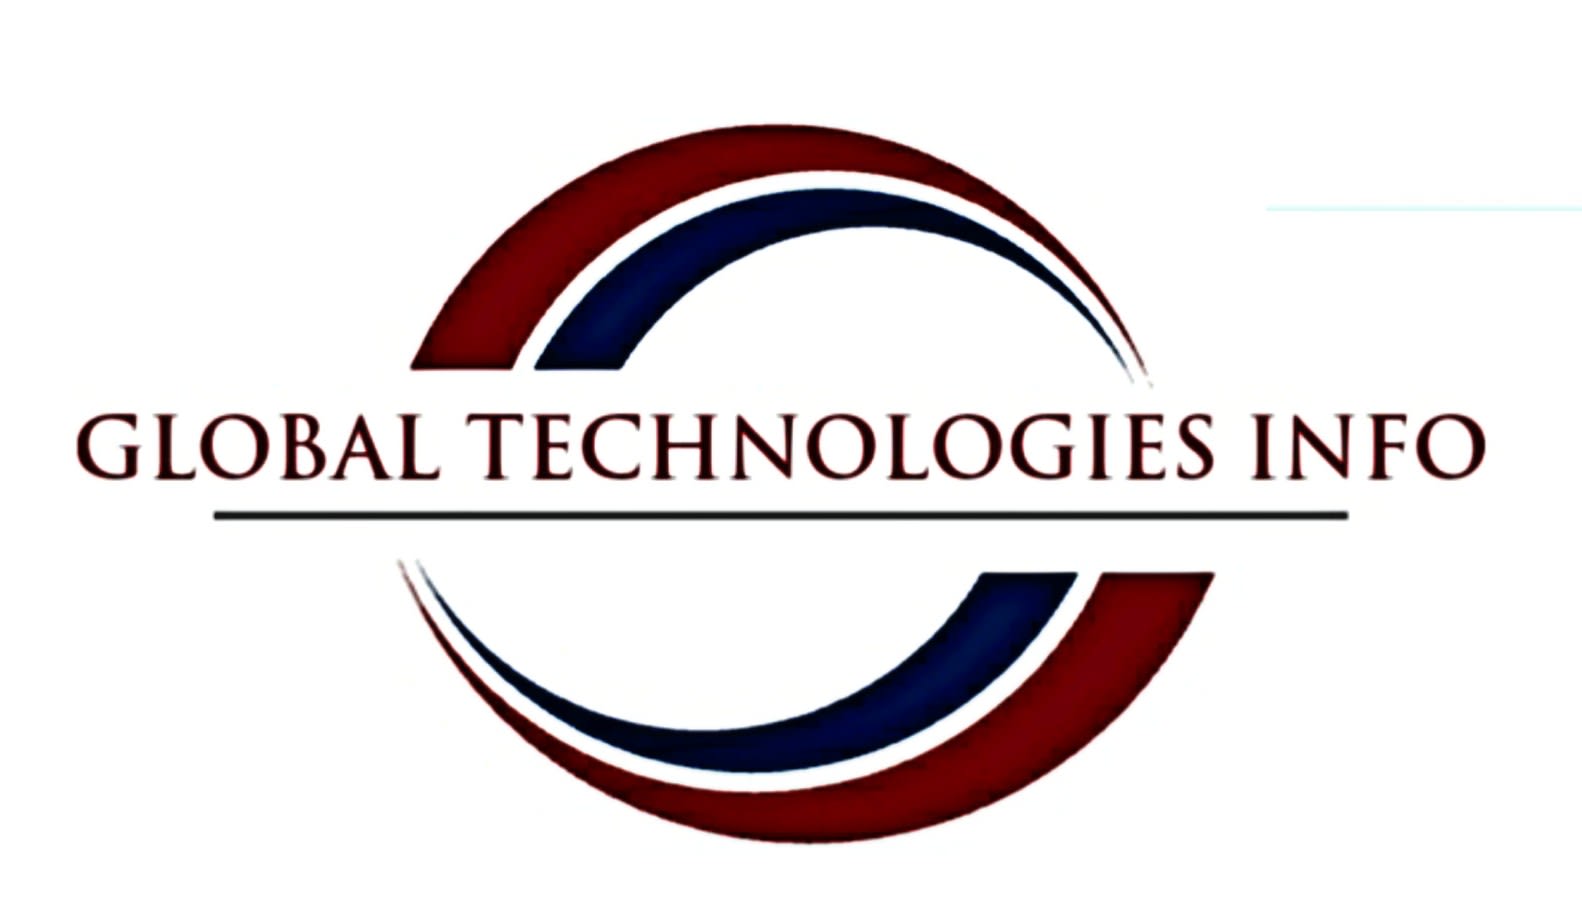 GLOBAL TECHNOLOGIES INFO